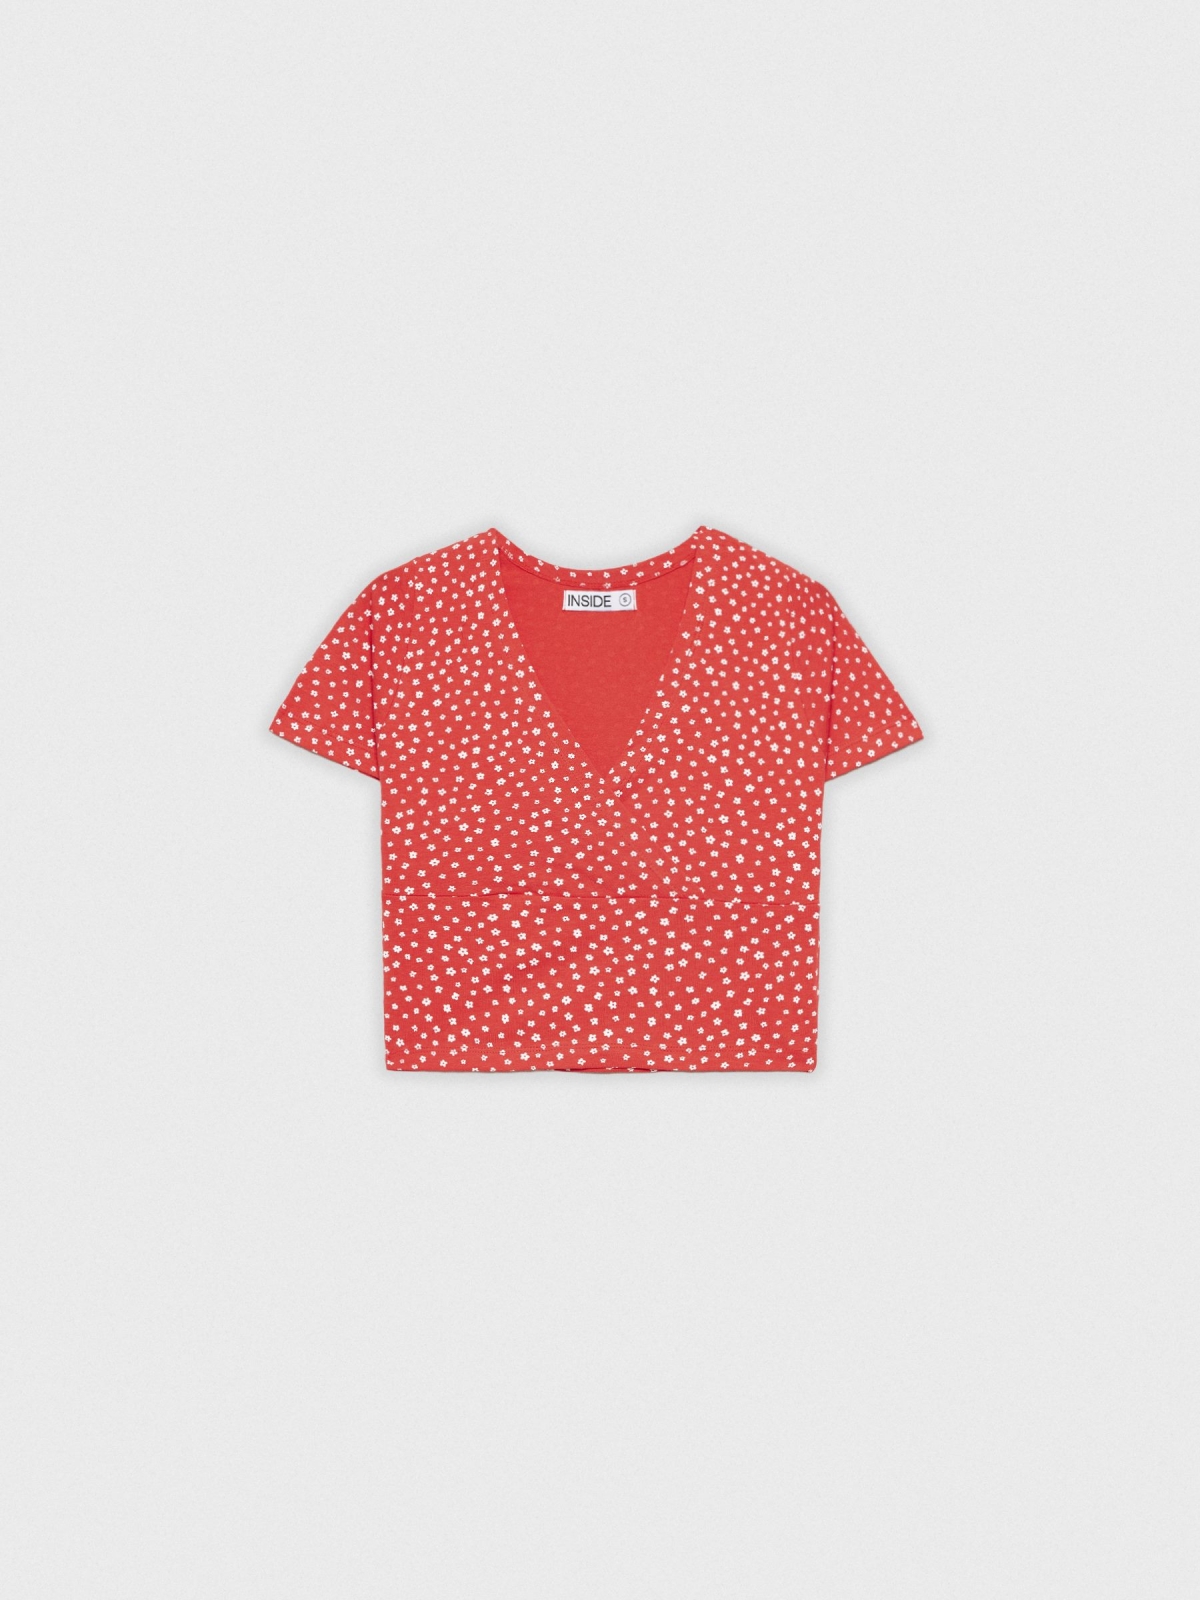  Camiseta crop escote cruzado rojo